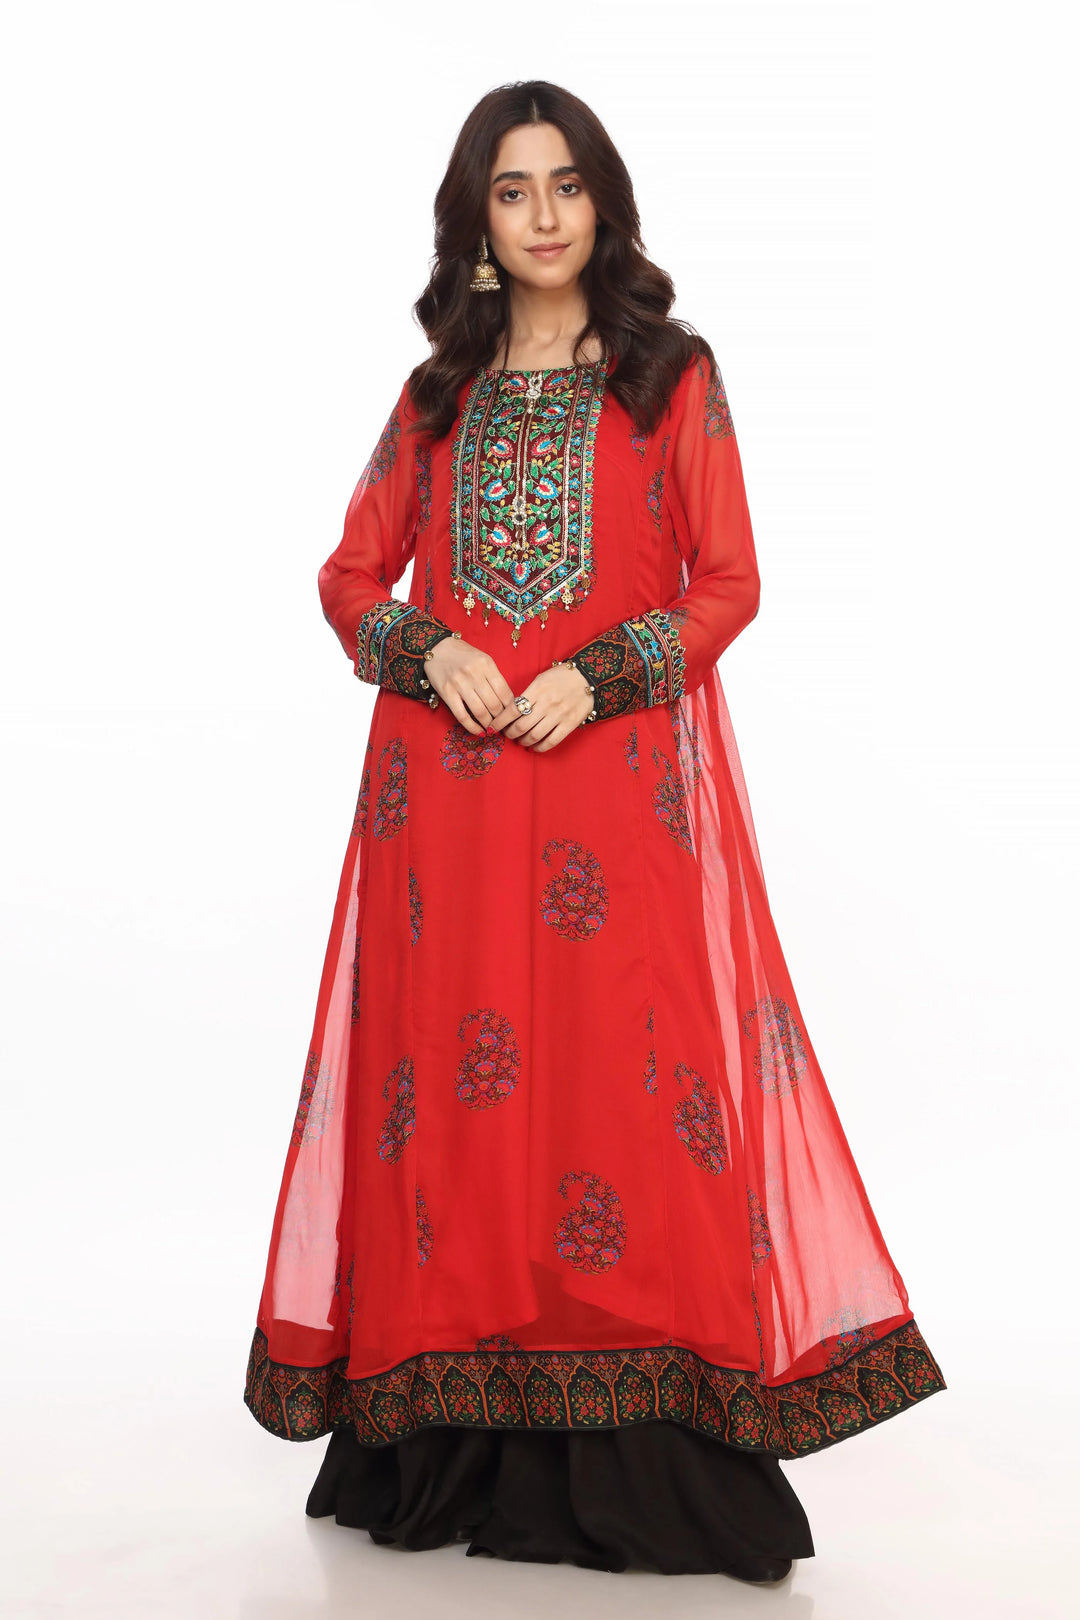 RANG JA Red Ethnic Dress Women Shirt 1PC | FR0709-12